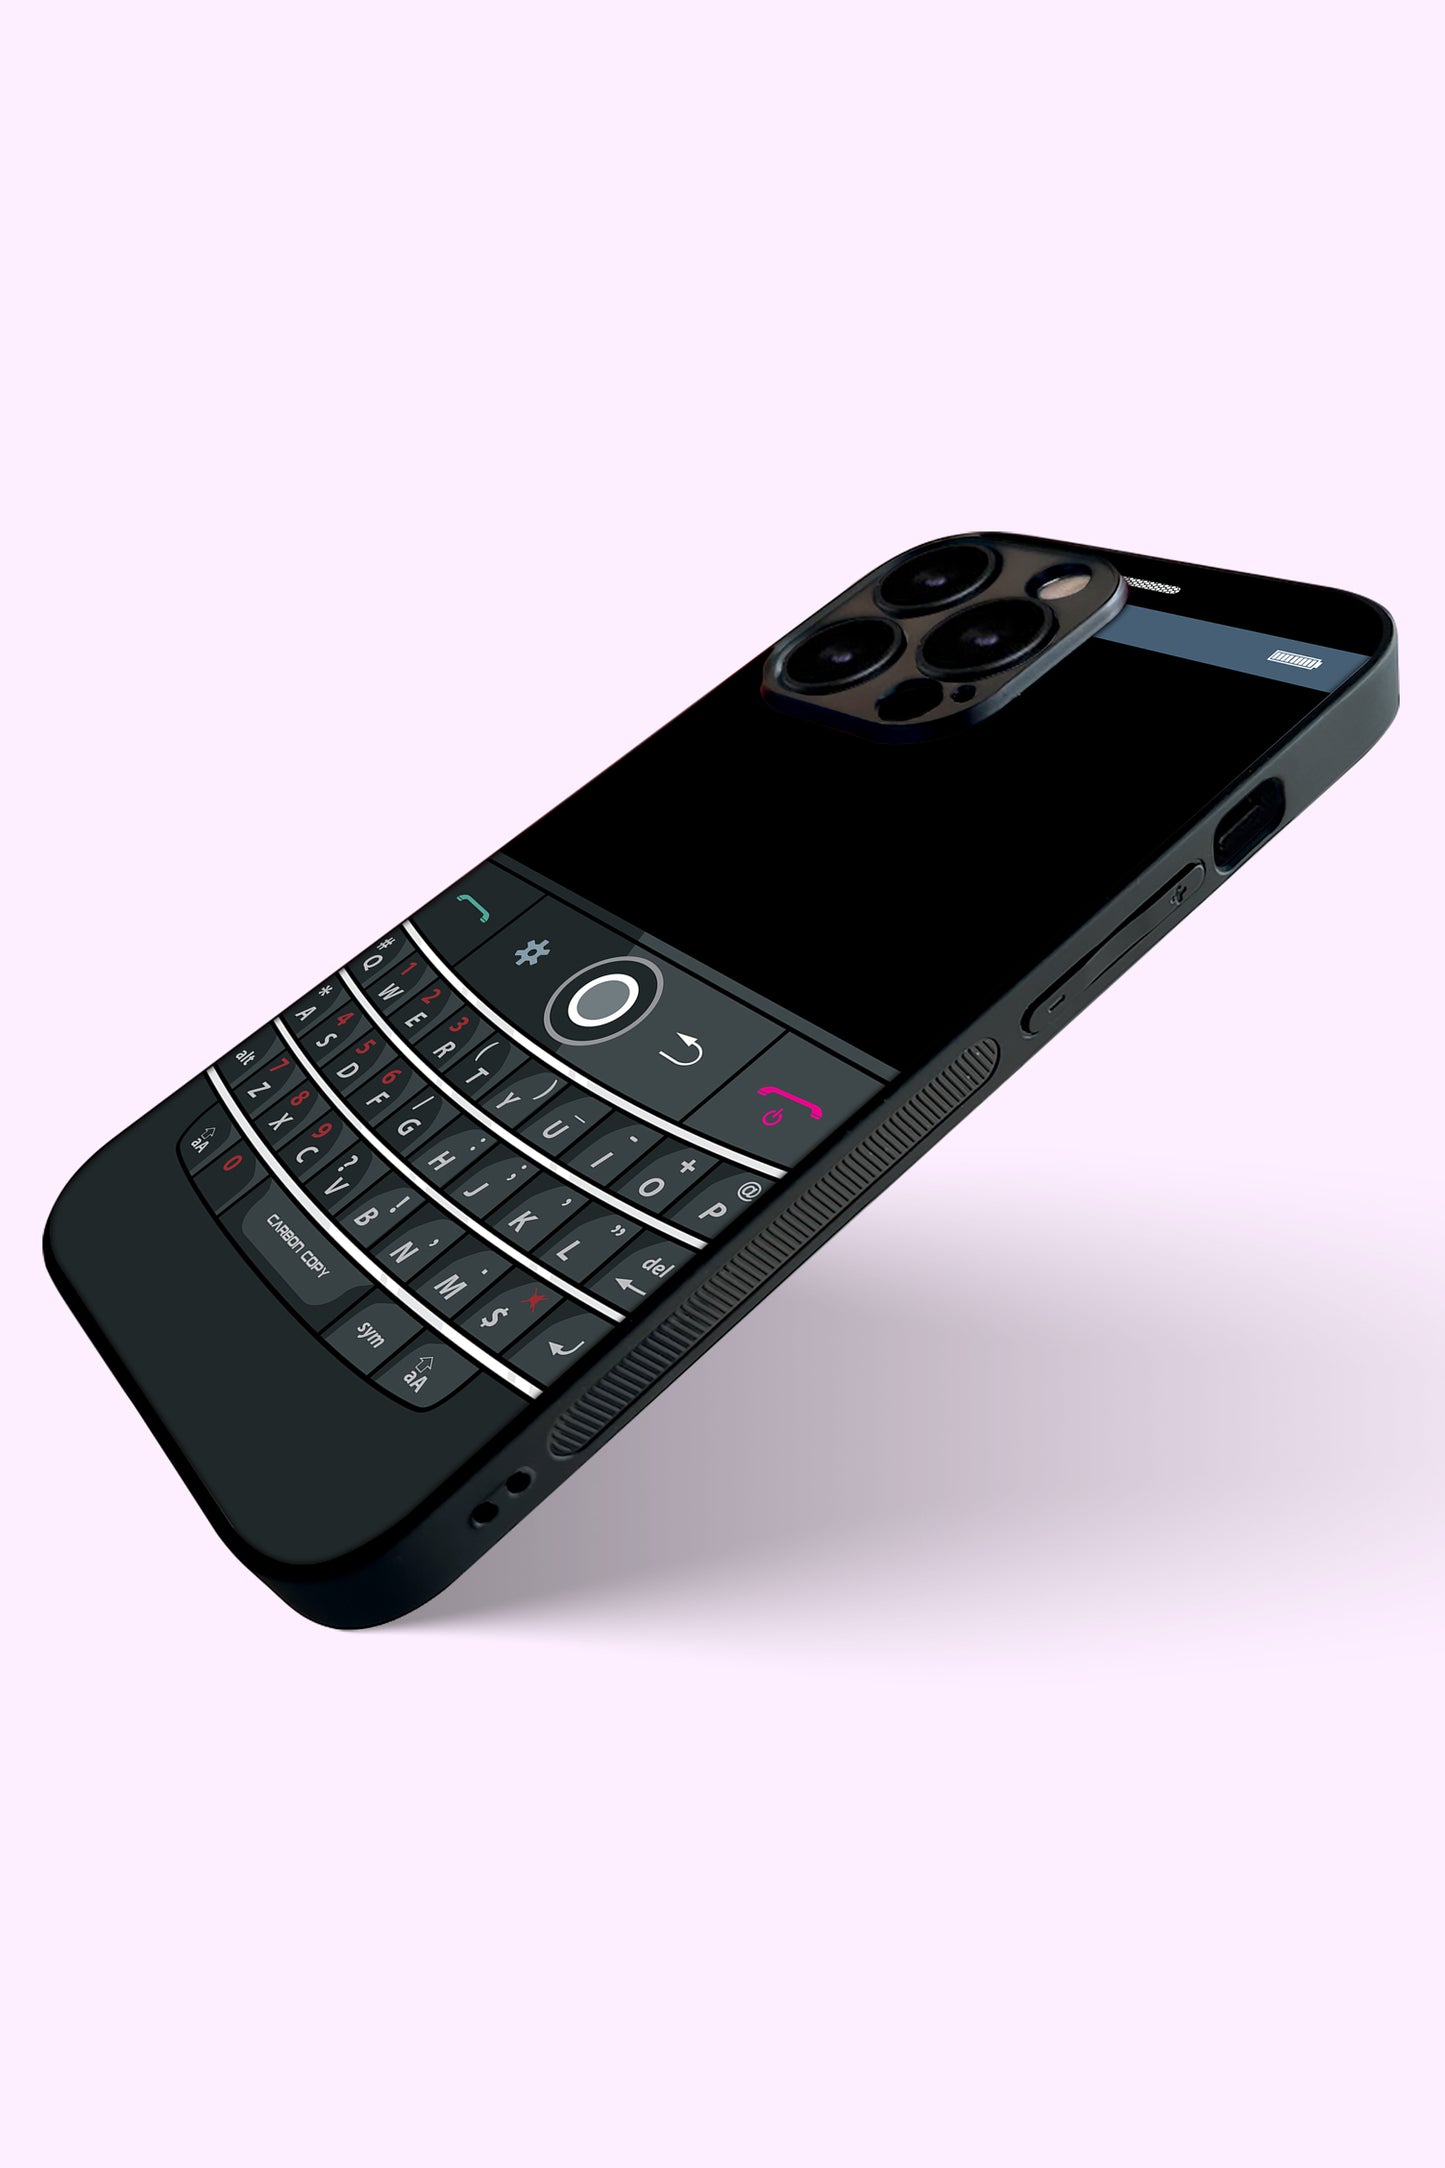 BlackBerry Premium Phone Glass Case